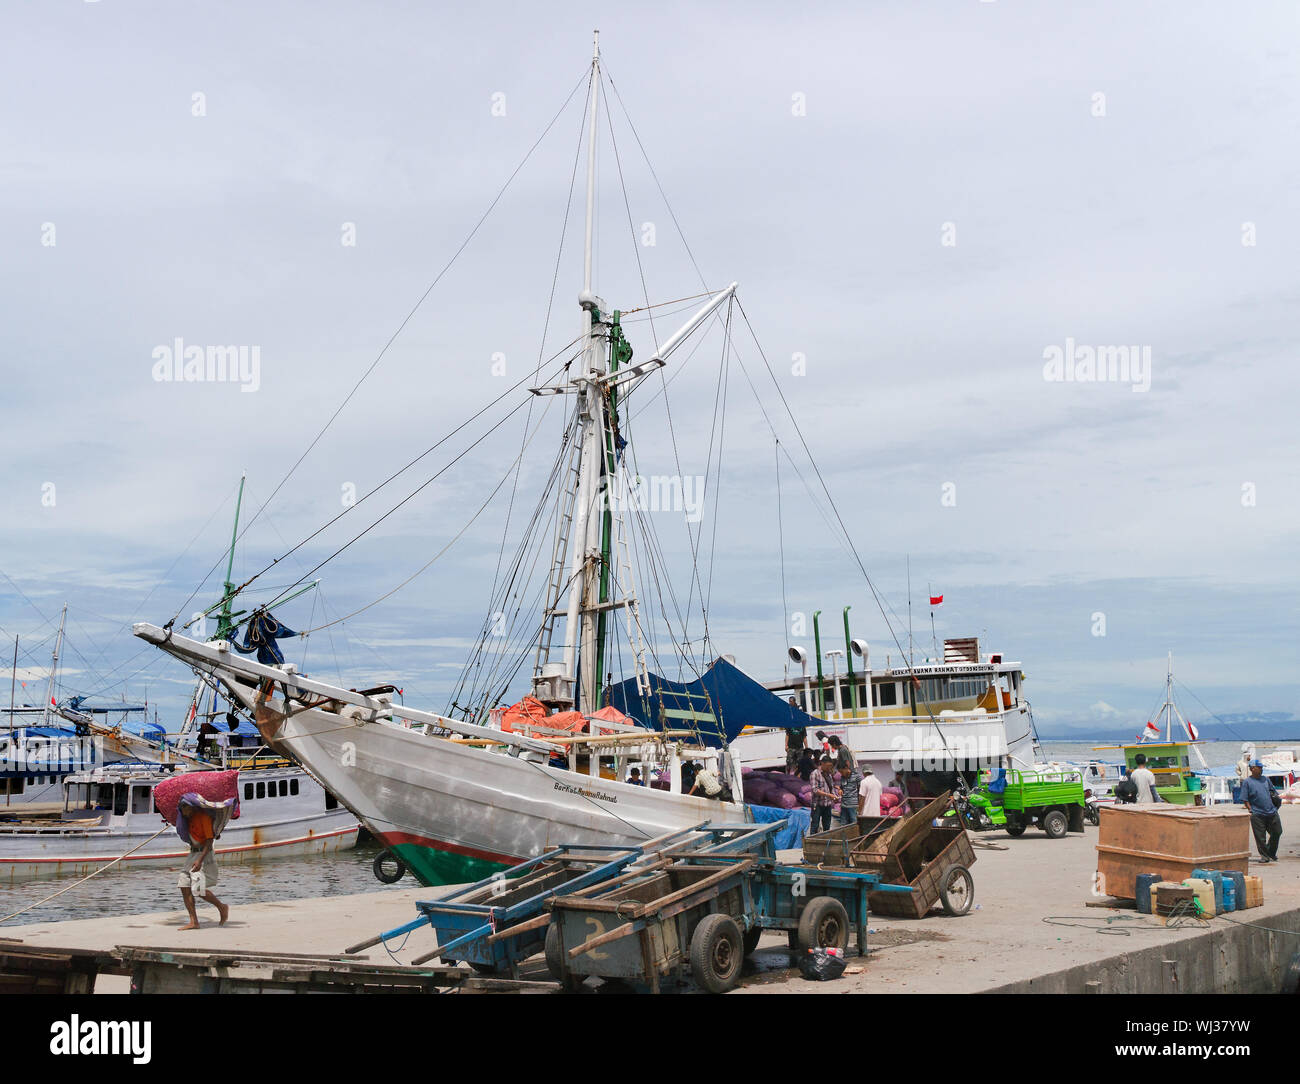 Pinisi in Paotere Hafen, Makassar, Sulawesi, Indonesien Stockfoto